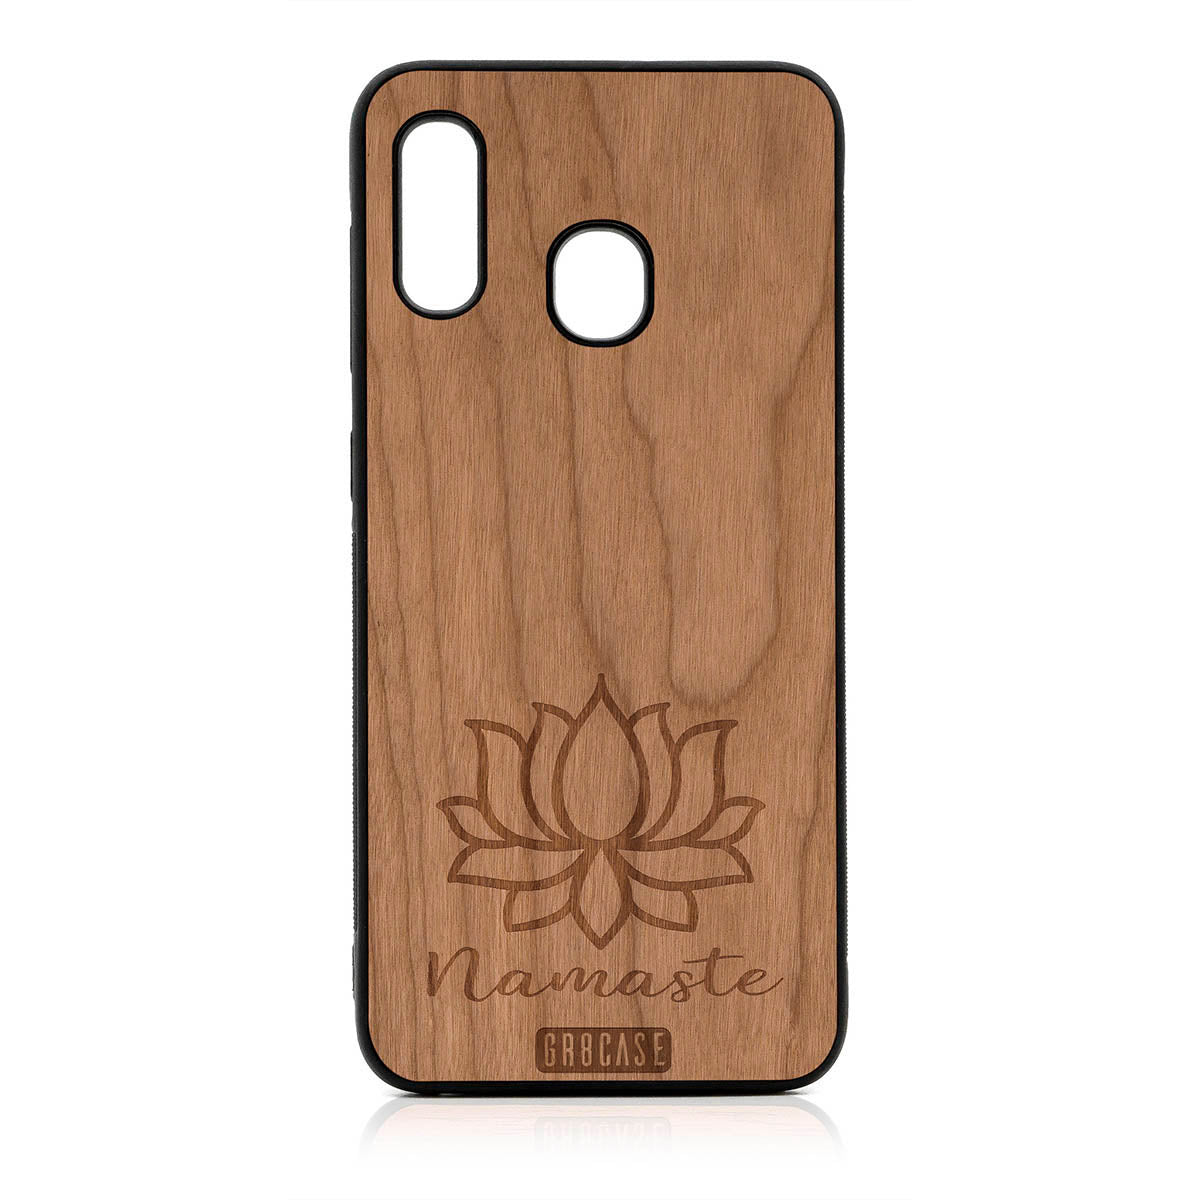 Namaste (Lotus Flower) Design Wood Case For Samsung Galaxy A20